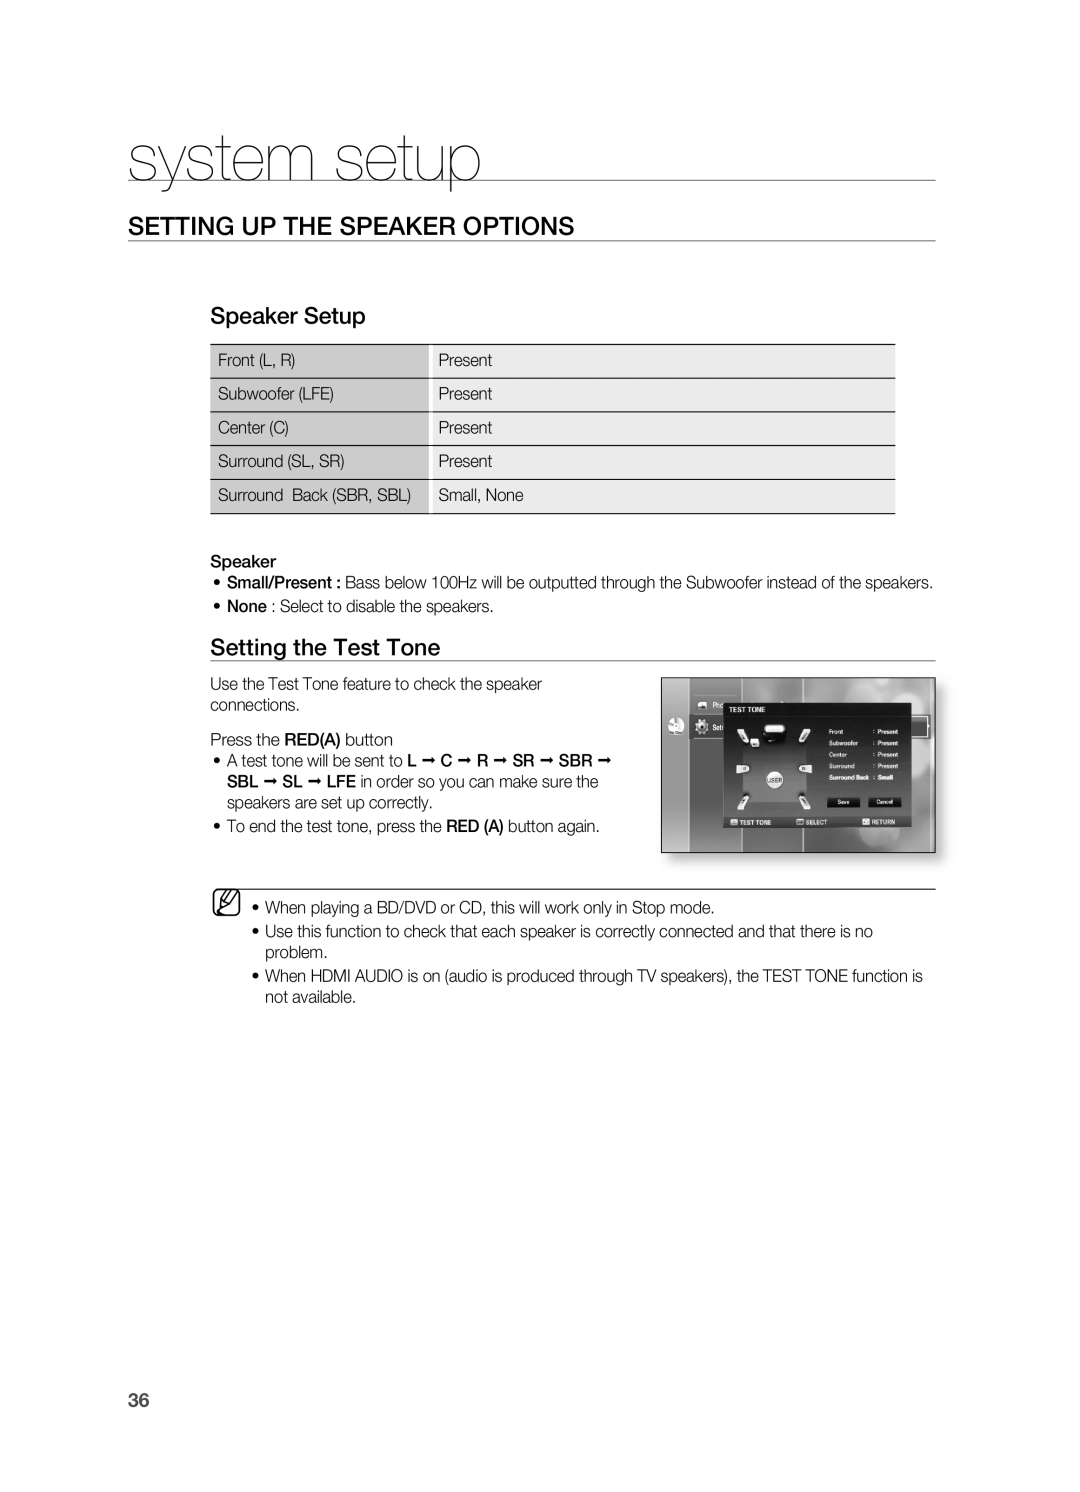 Samsung HT-BD2 manual Speaker Setup, Setting the Test Tone, system setup, Setting Up The Speaker Options 